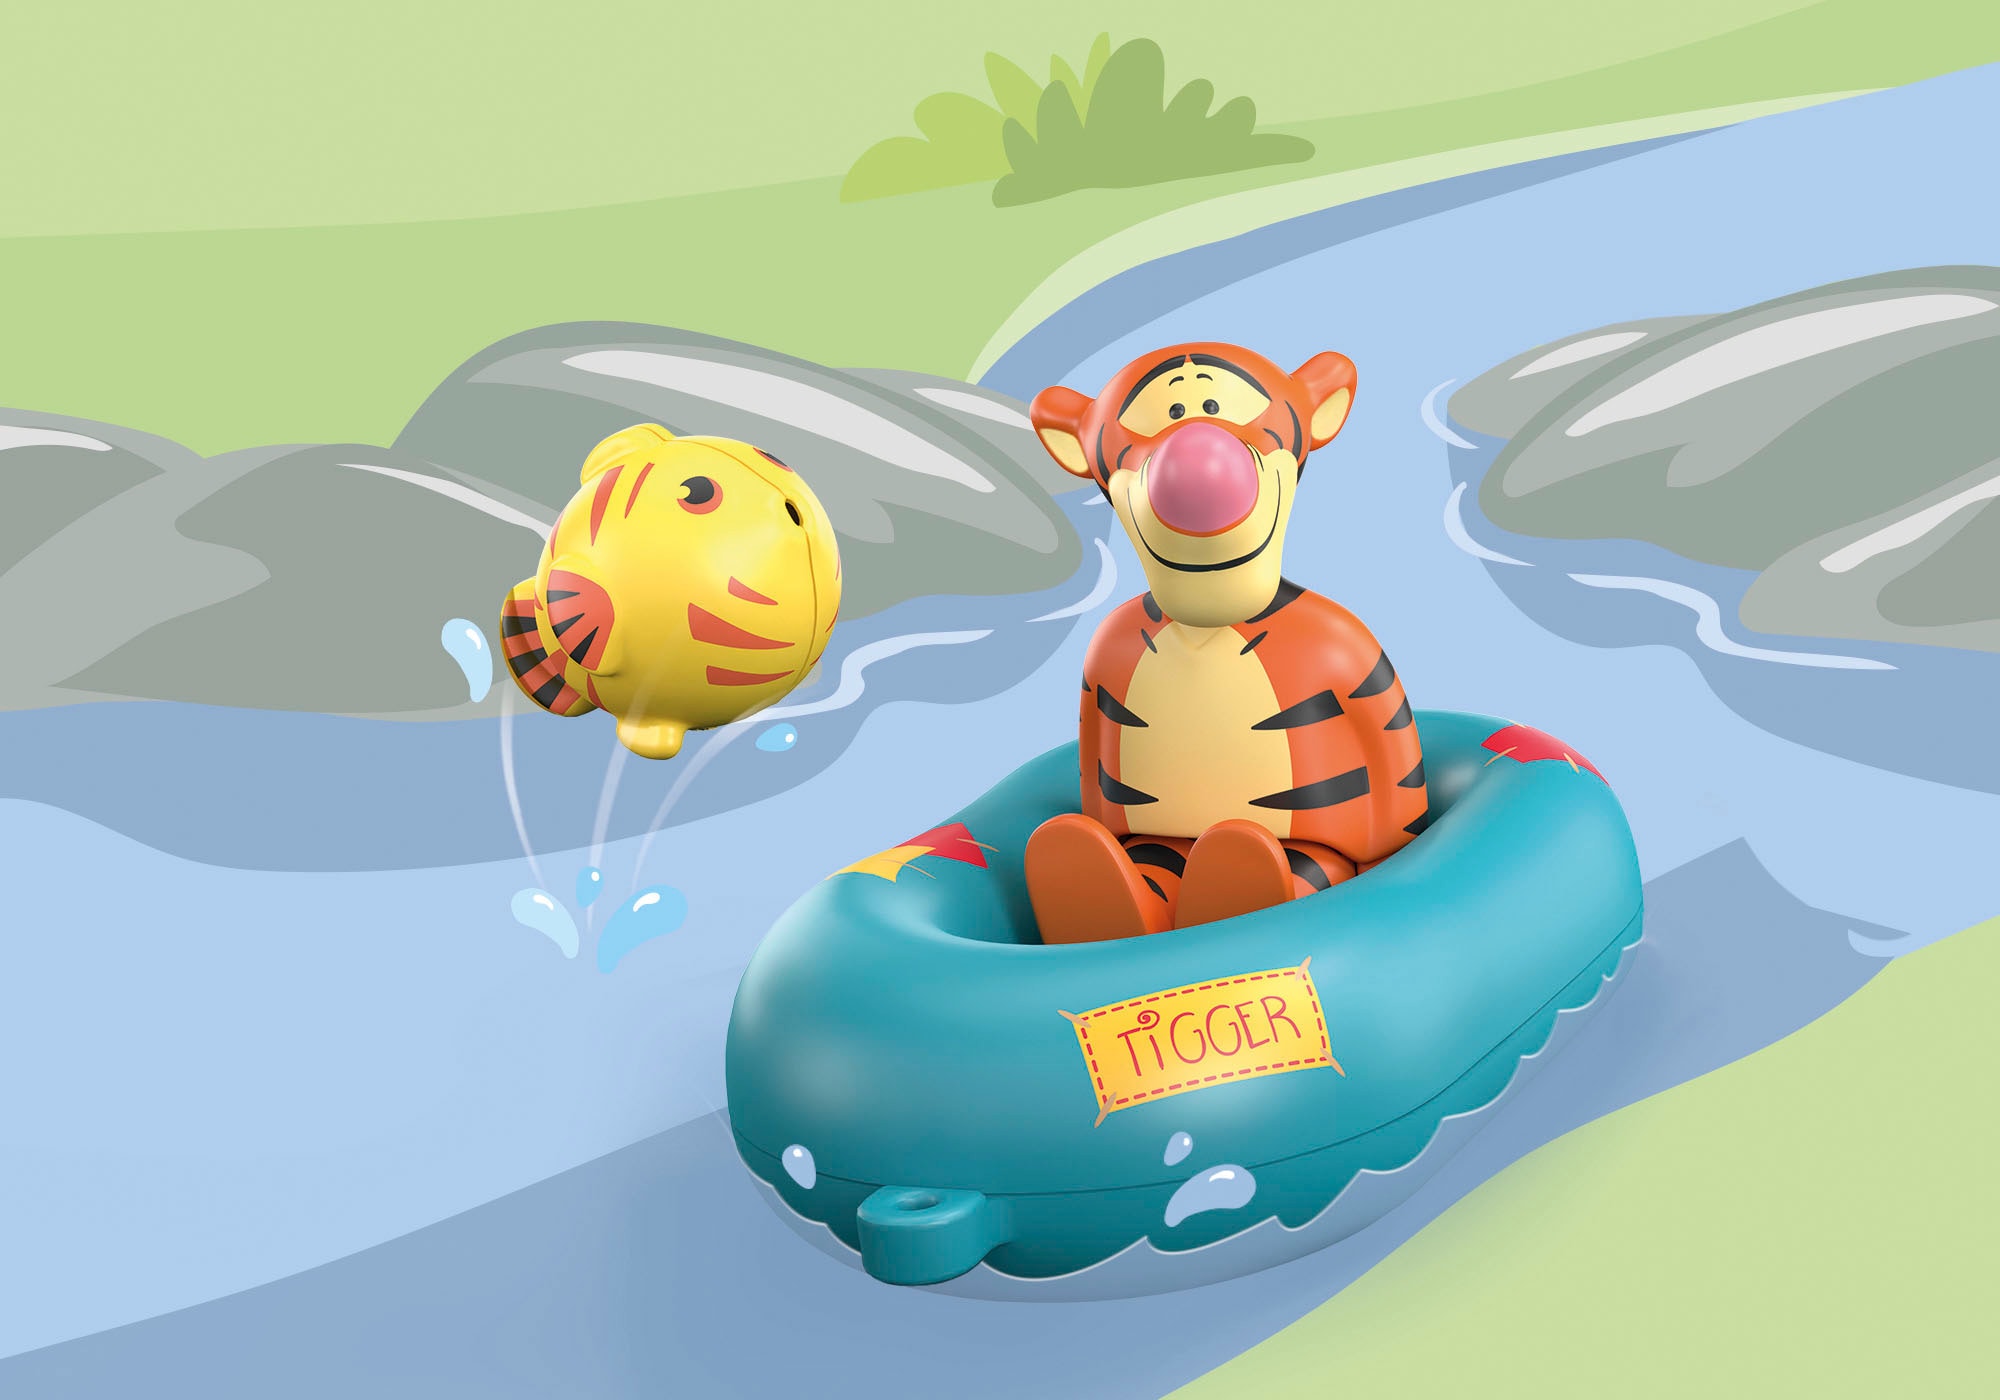 Playmobil® Konstruktions-Spielset »1.2.3 & Disney: Tiggers Schlauchbootfahrt (71414)«, (3 St.), Disney & Winnie the Pooh, Aqua; Made in Europe